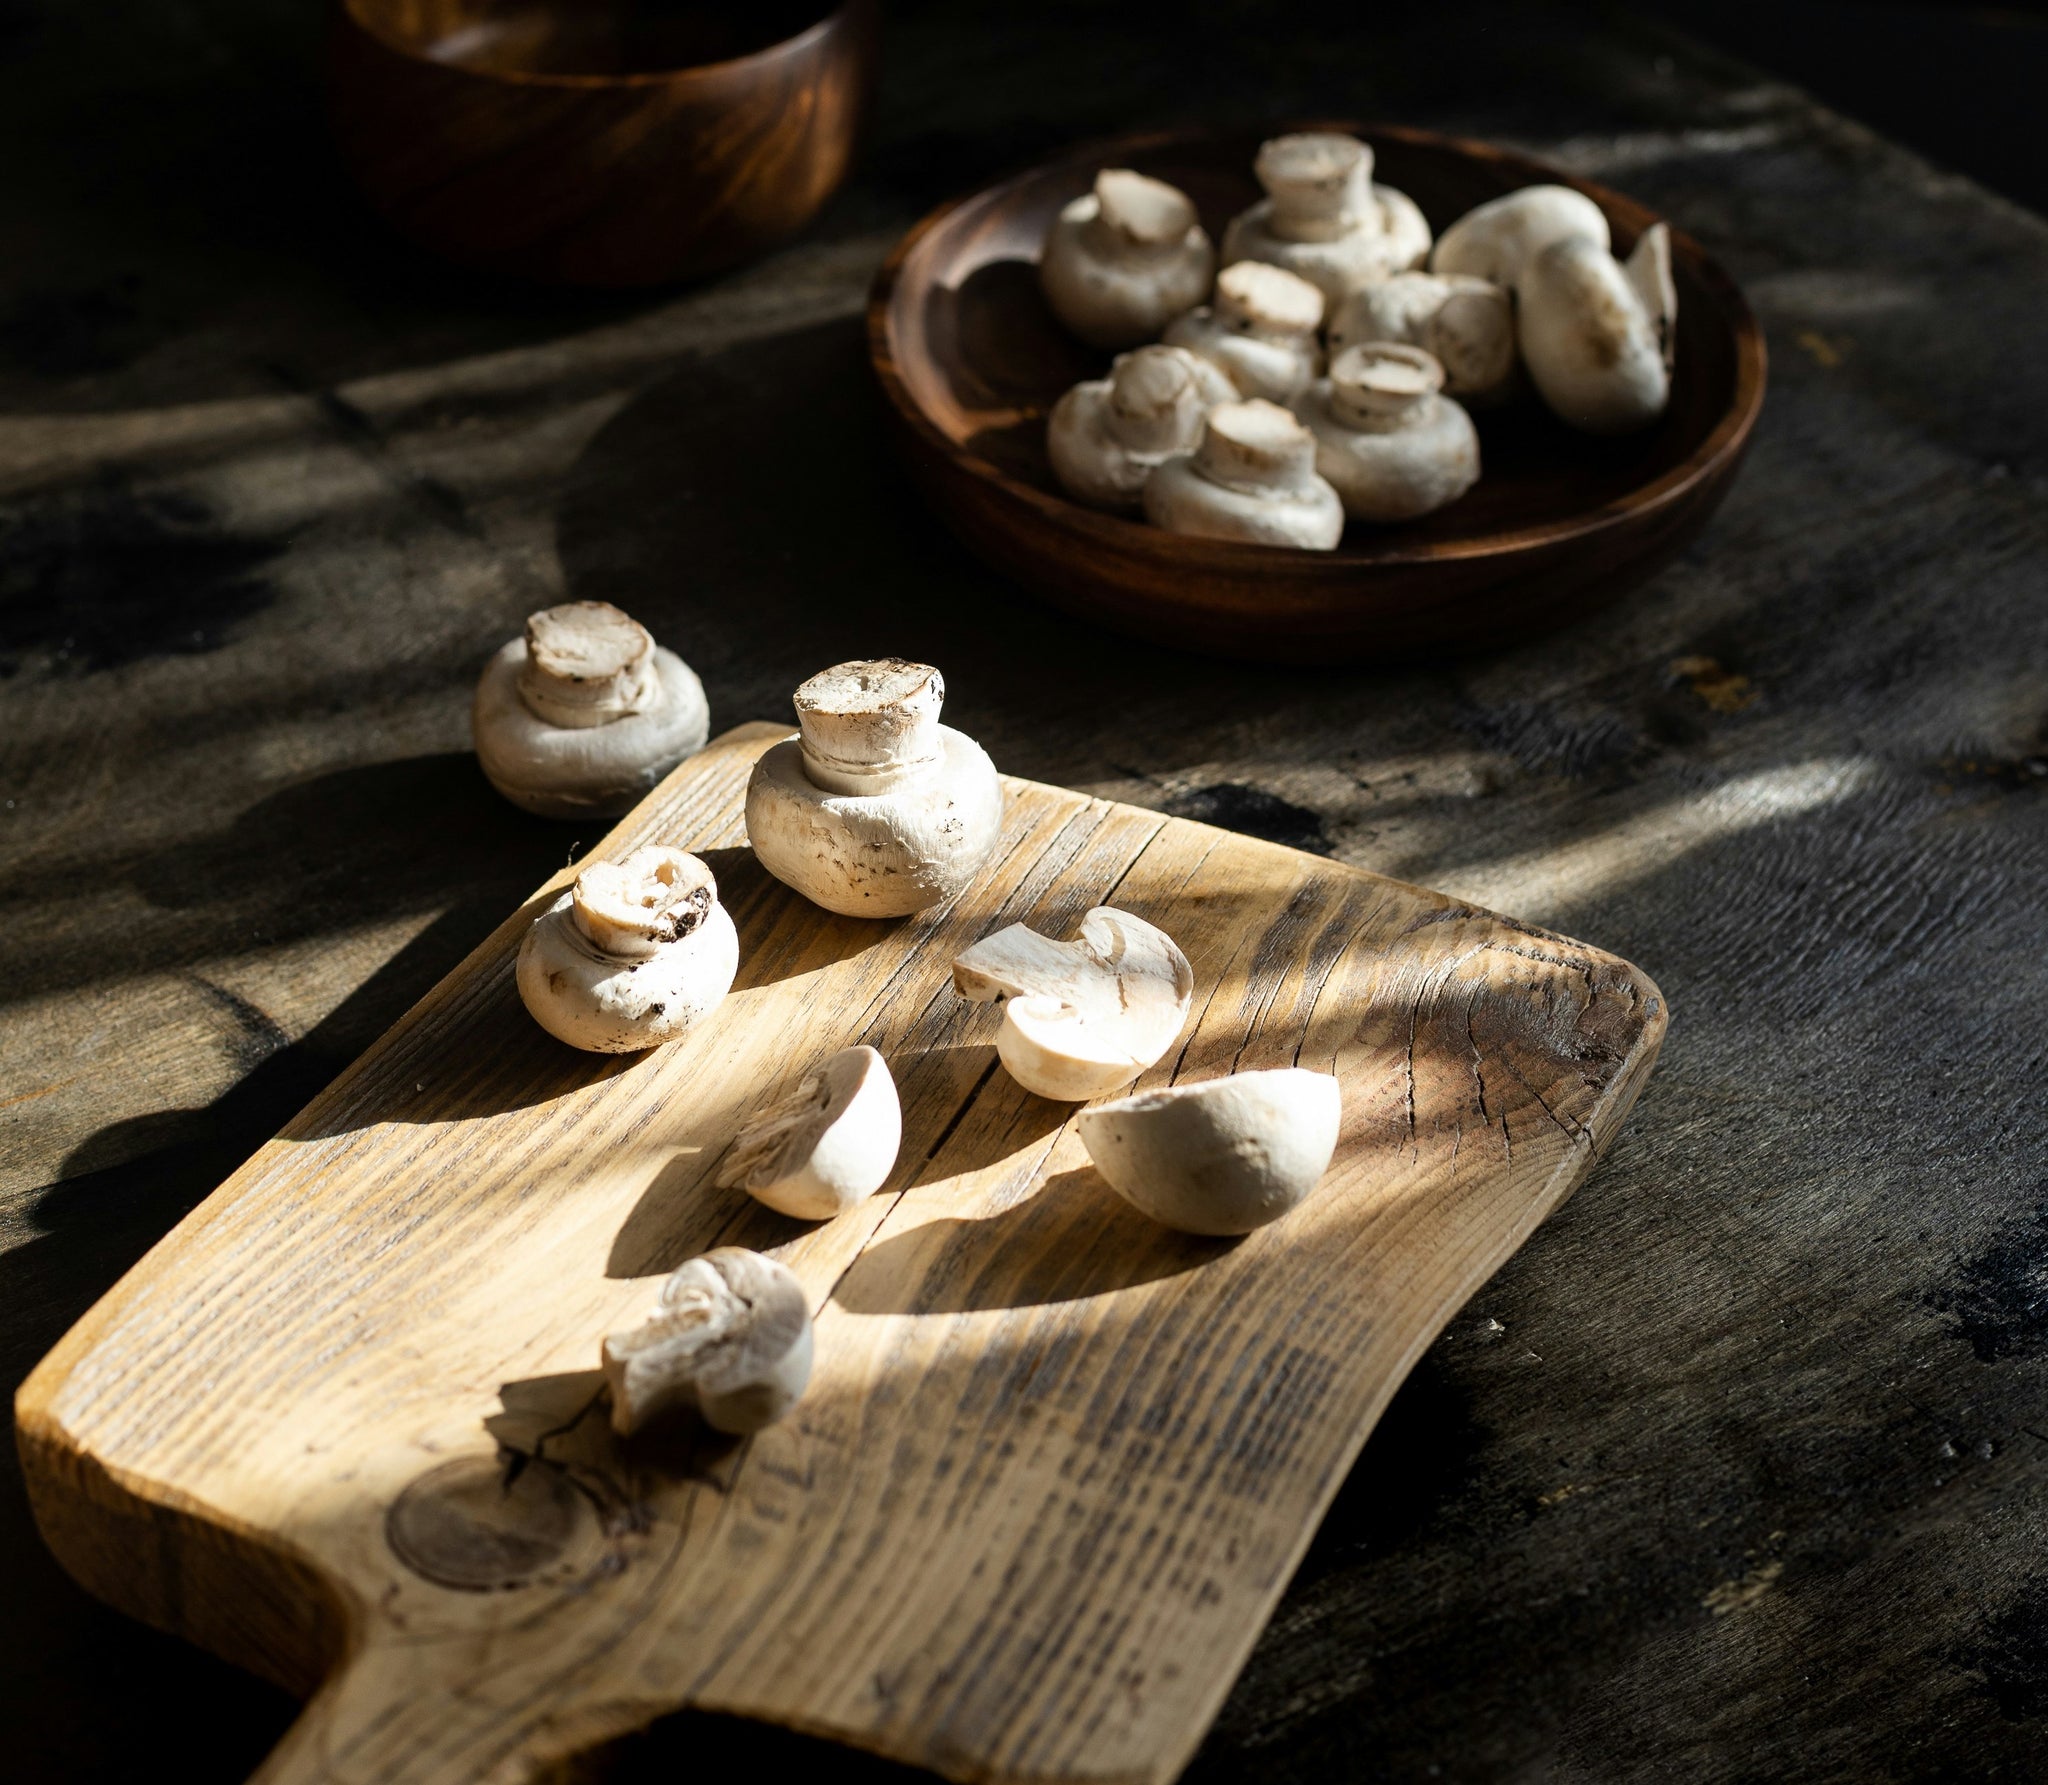 Mushroom displayed on a cutting board